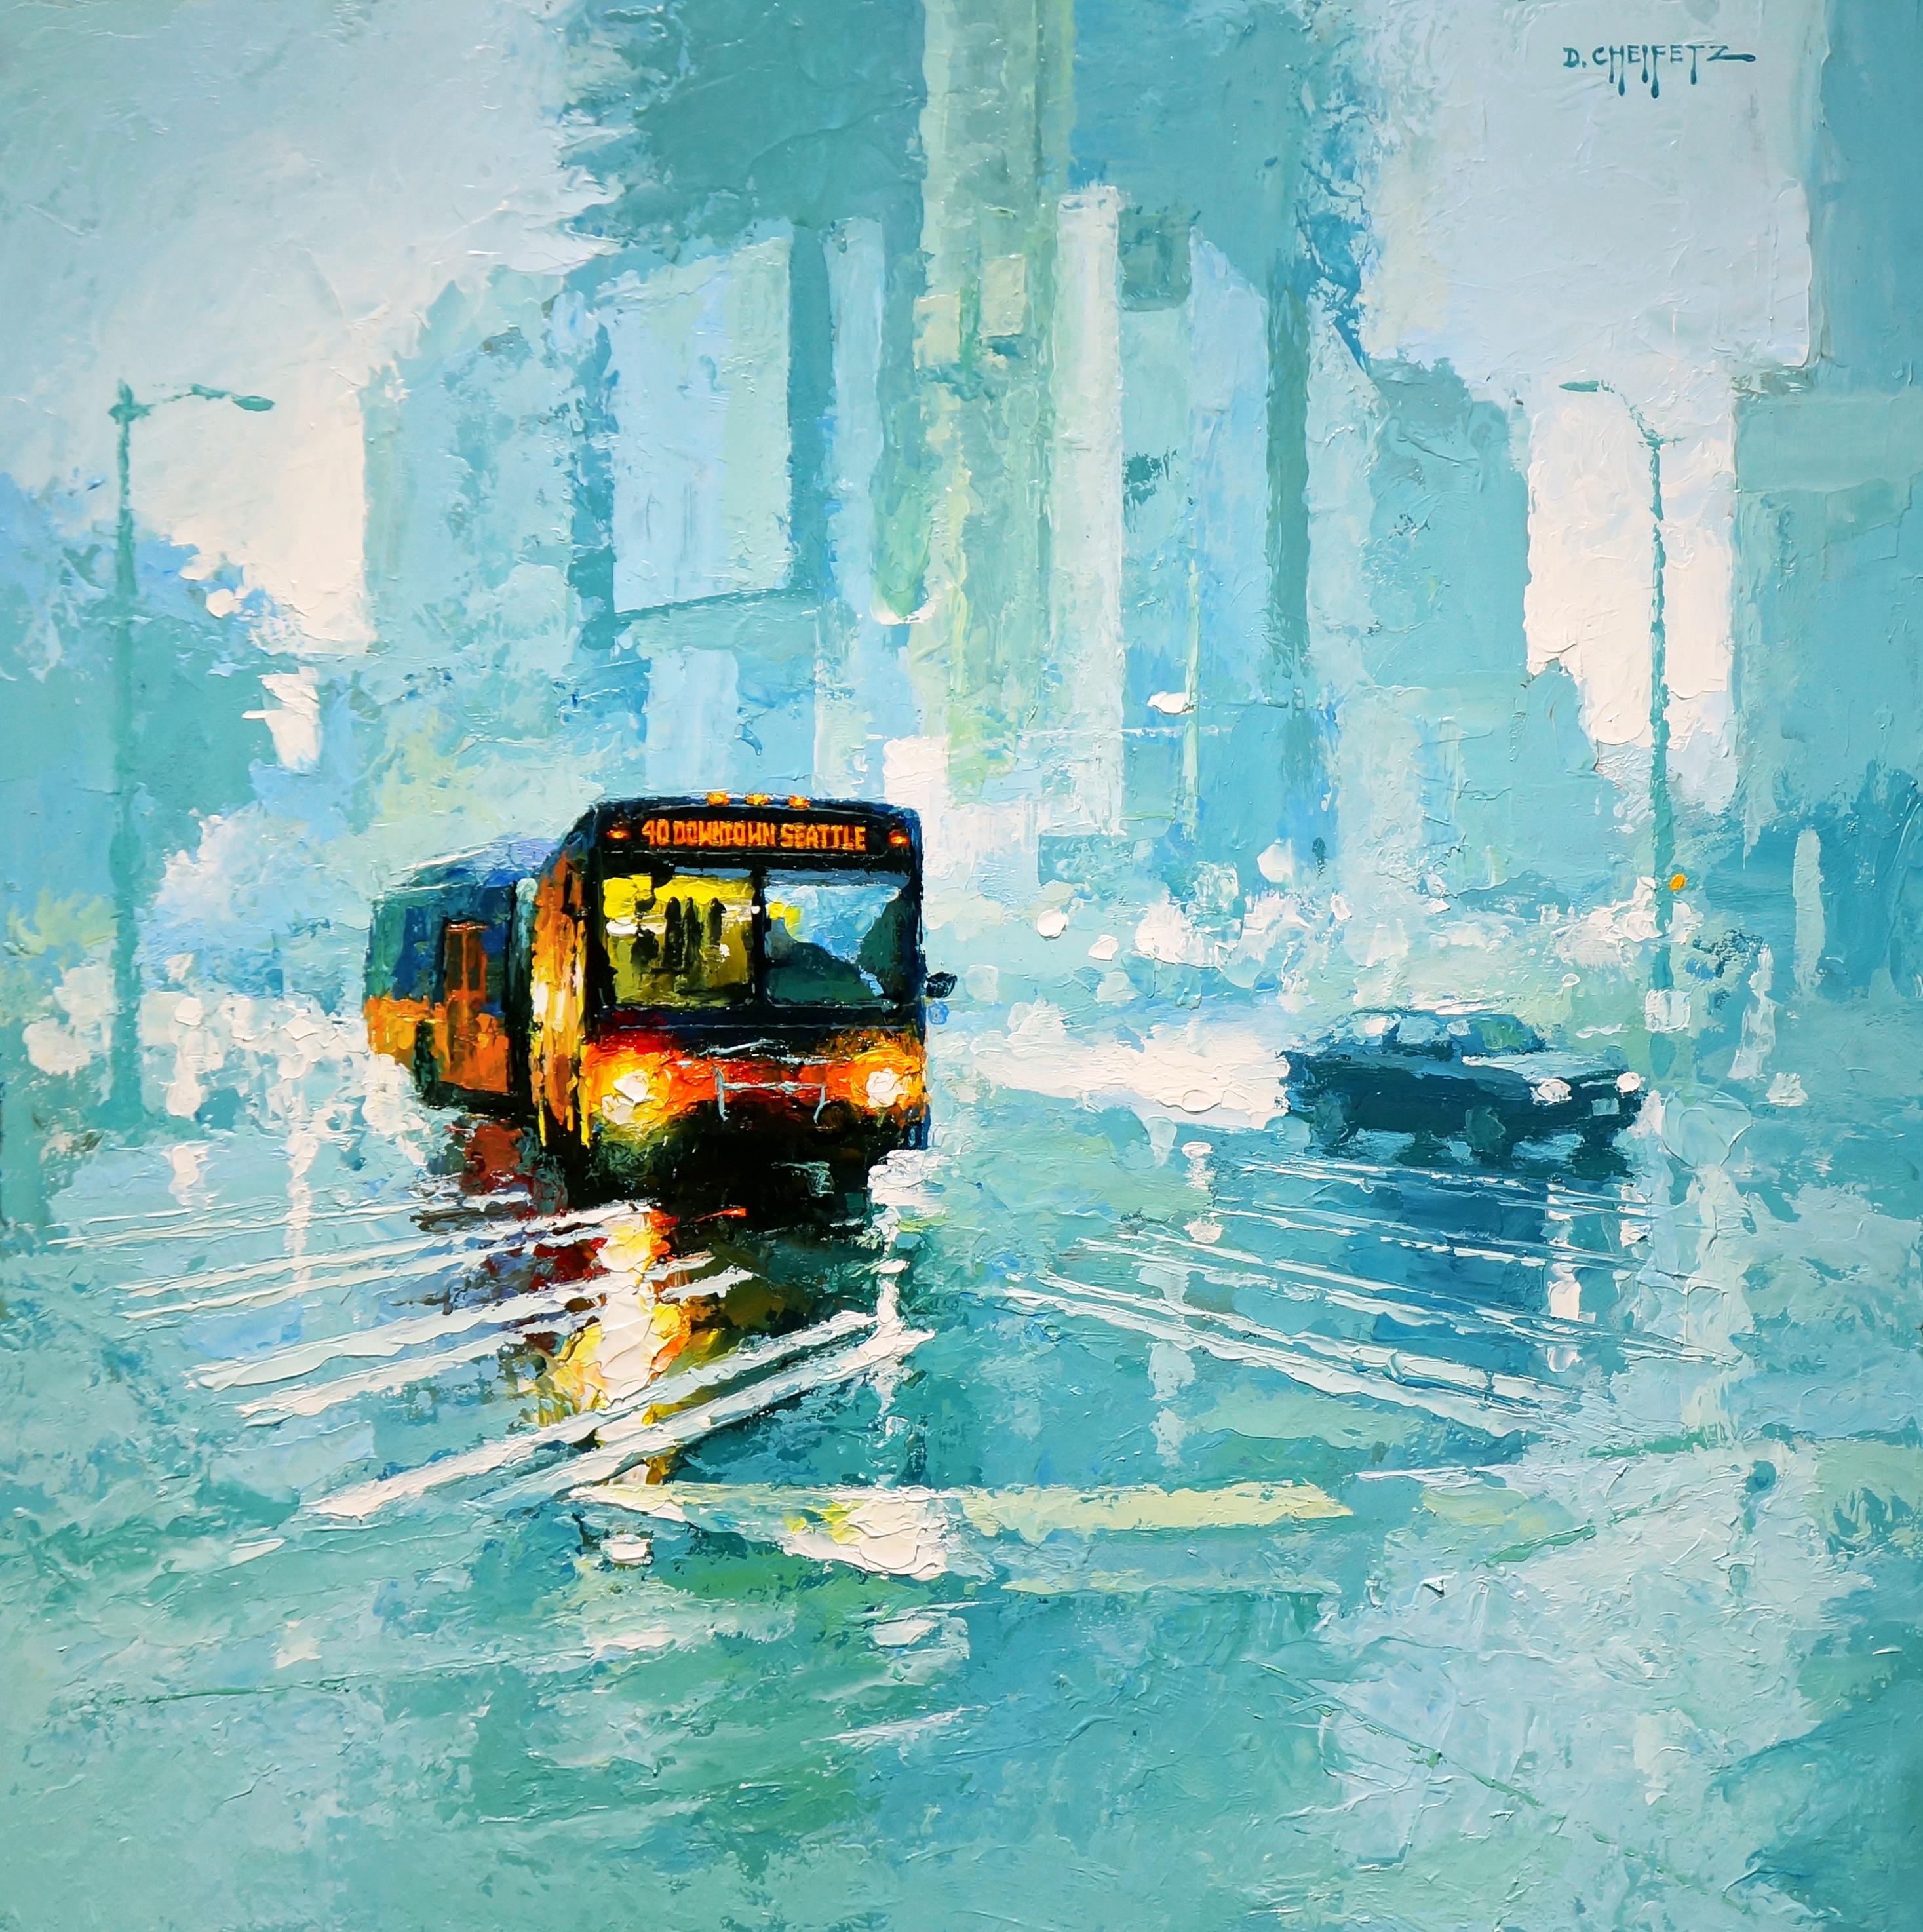 David Cheifetz Landscape Painting - 40 Downtown, Oil Painting